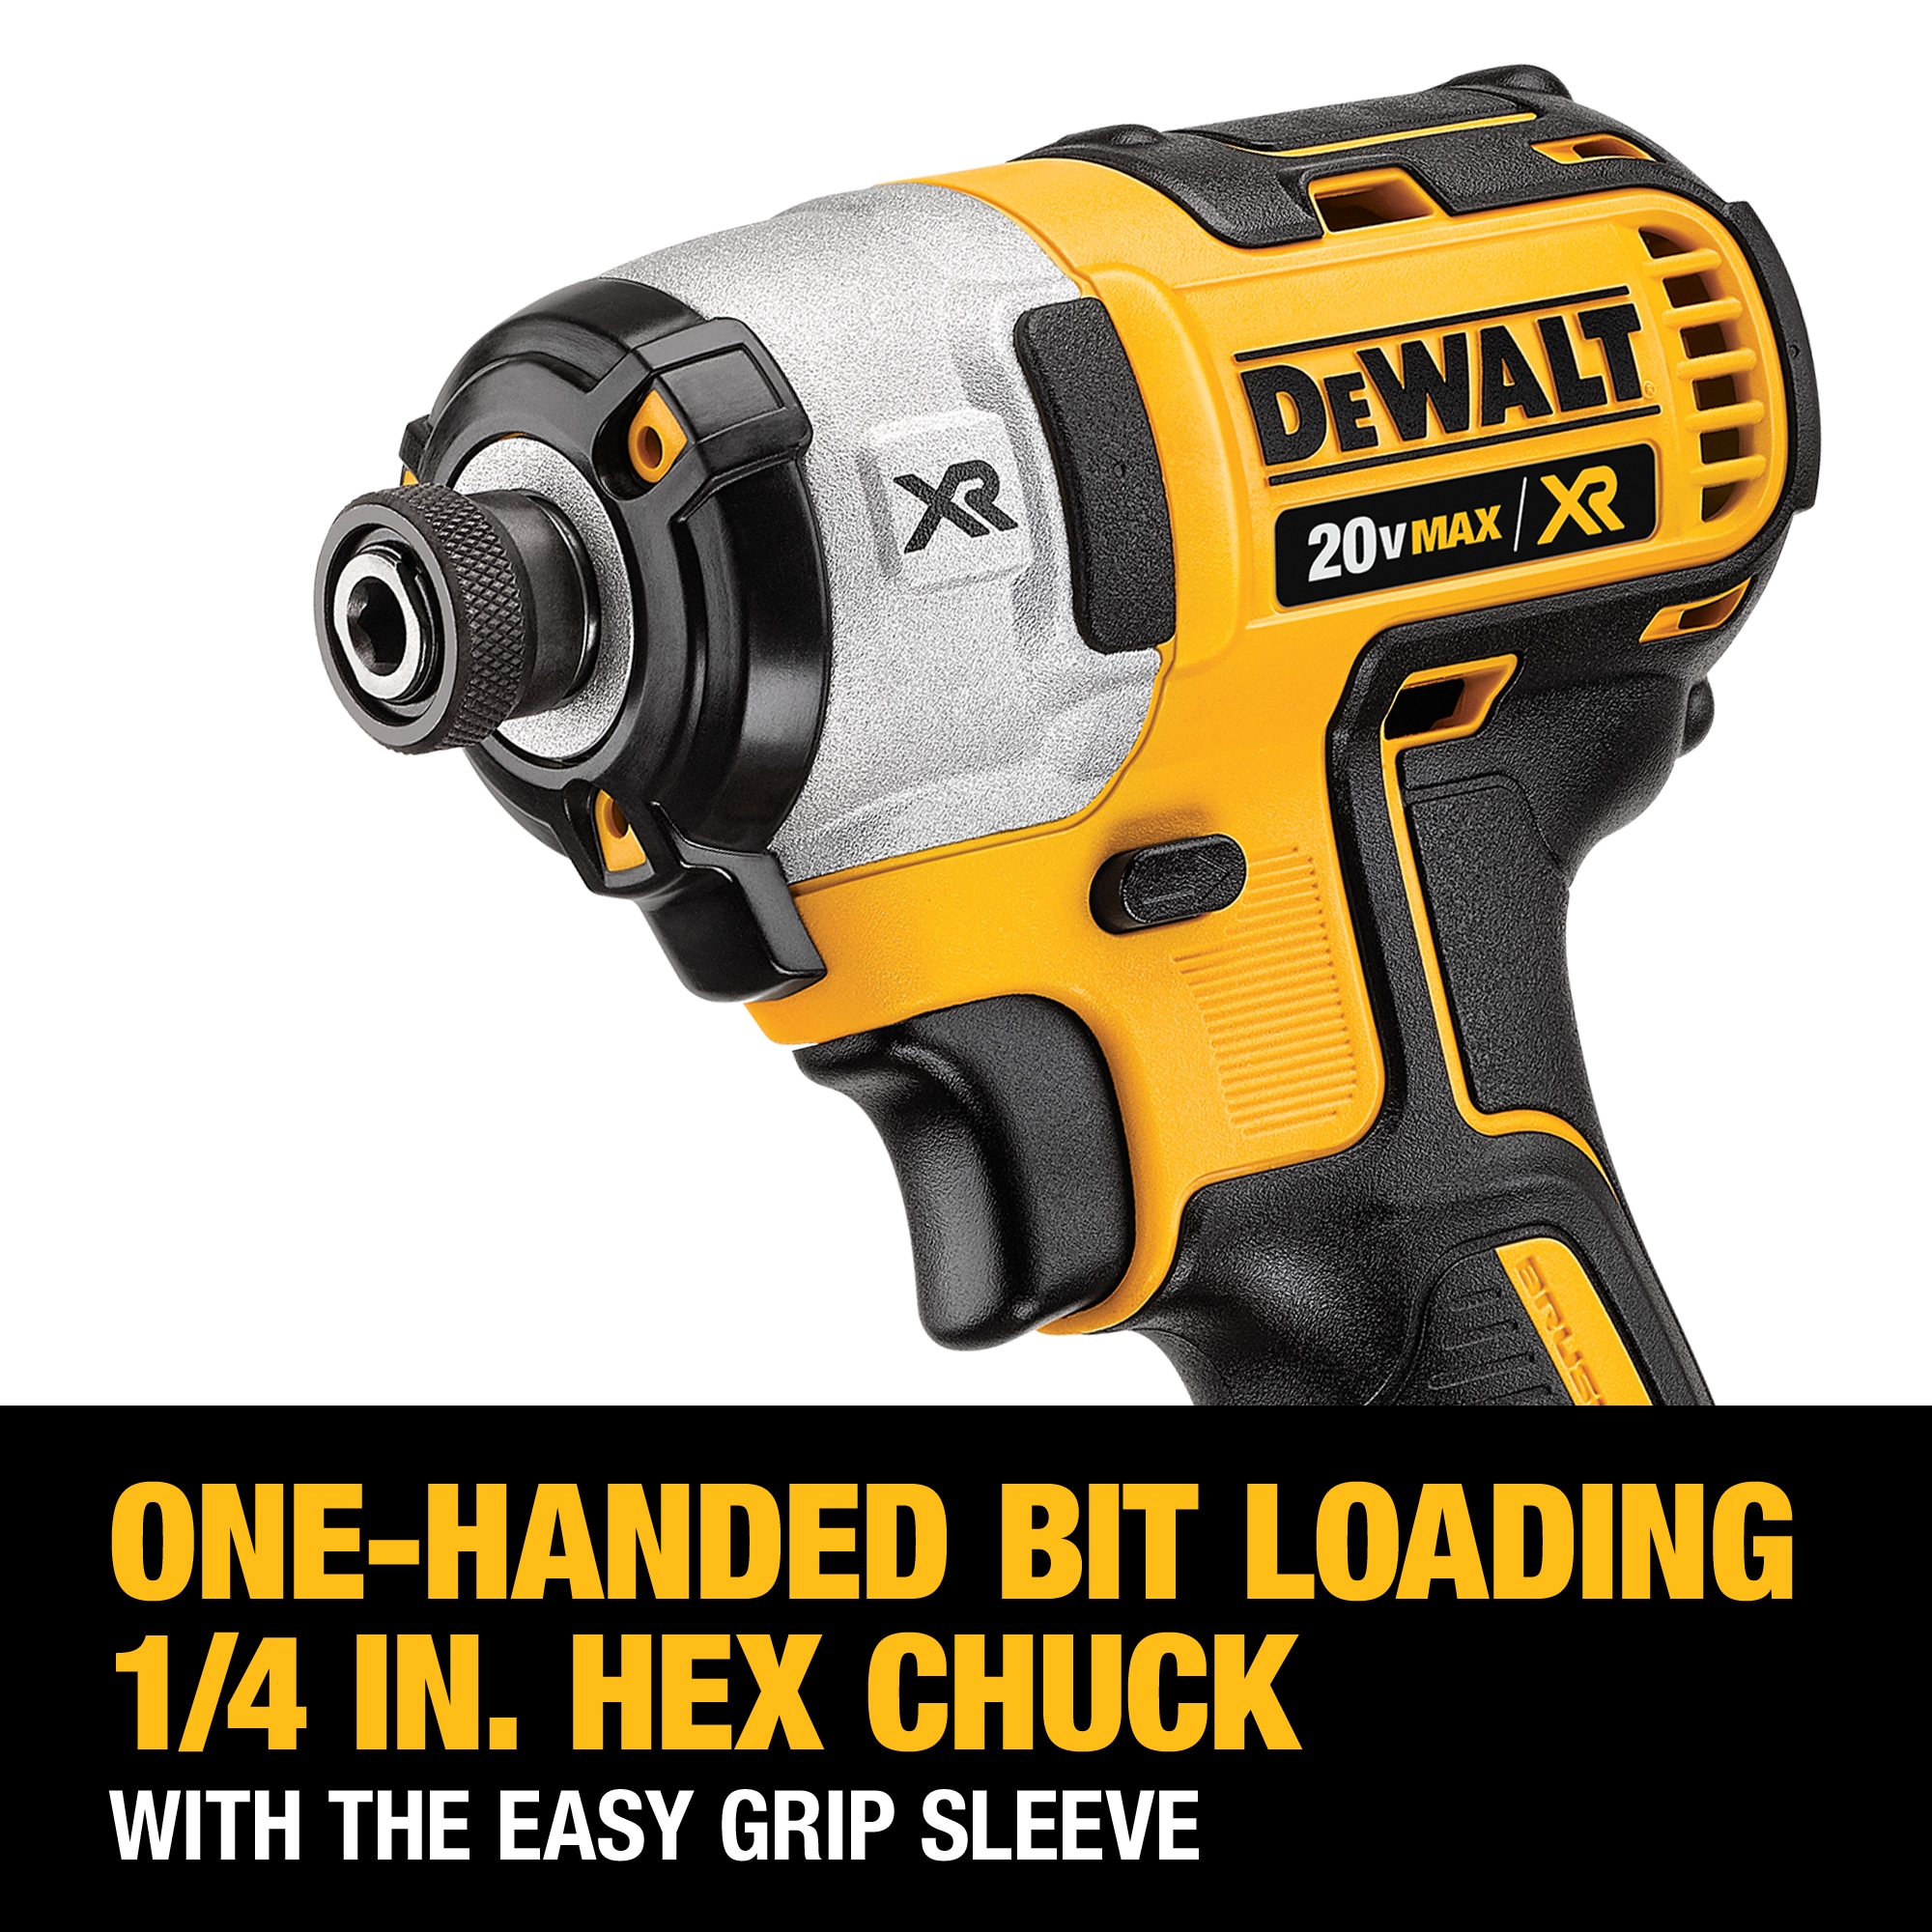 DEWALT 20V MAX XR Rotary Hammer Drill and Impact Driver Kit， 1